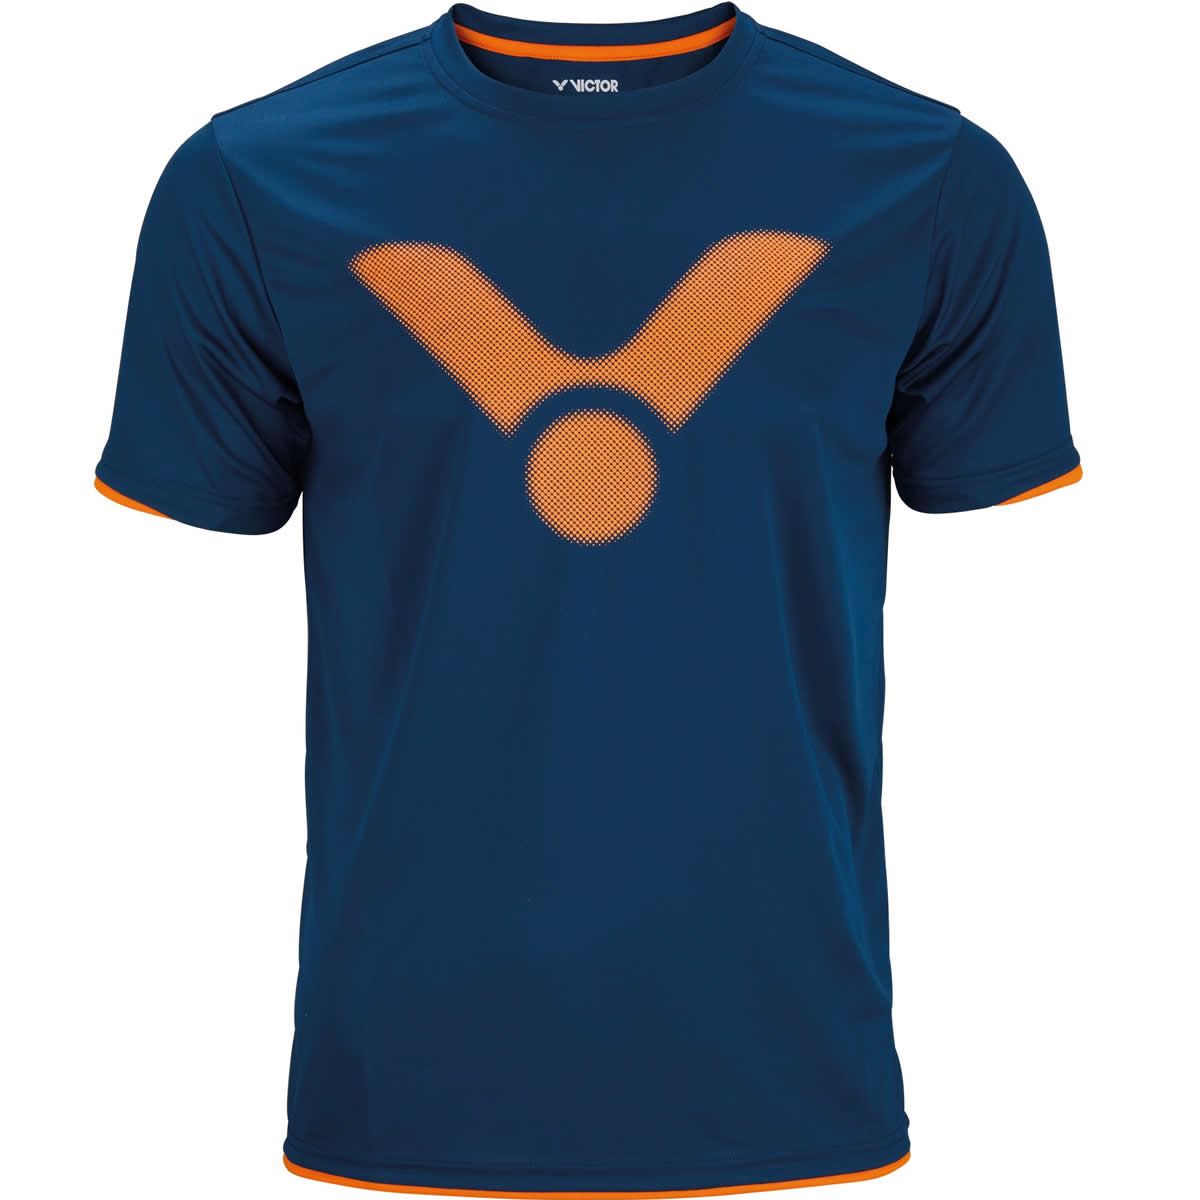 Victor Badminton T-Shirt Blue 6488